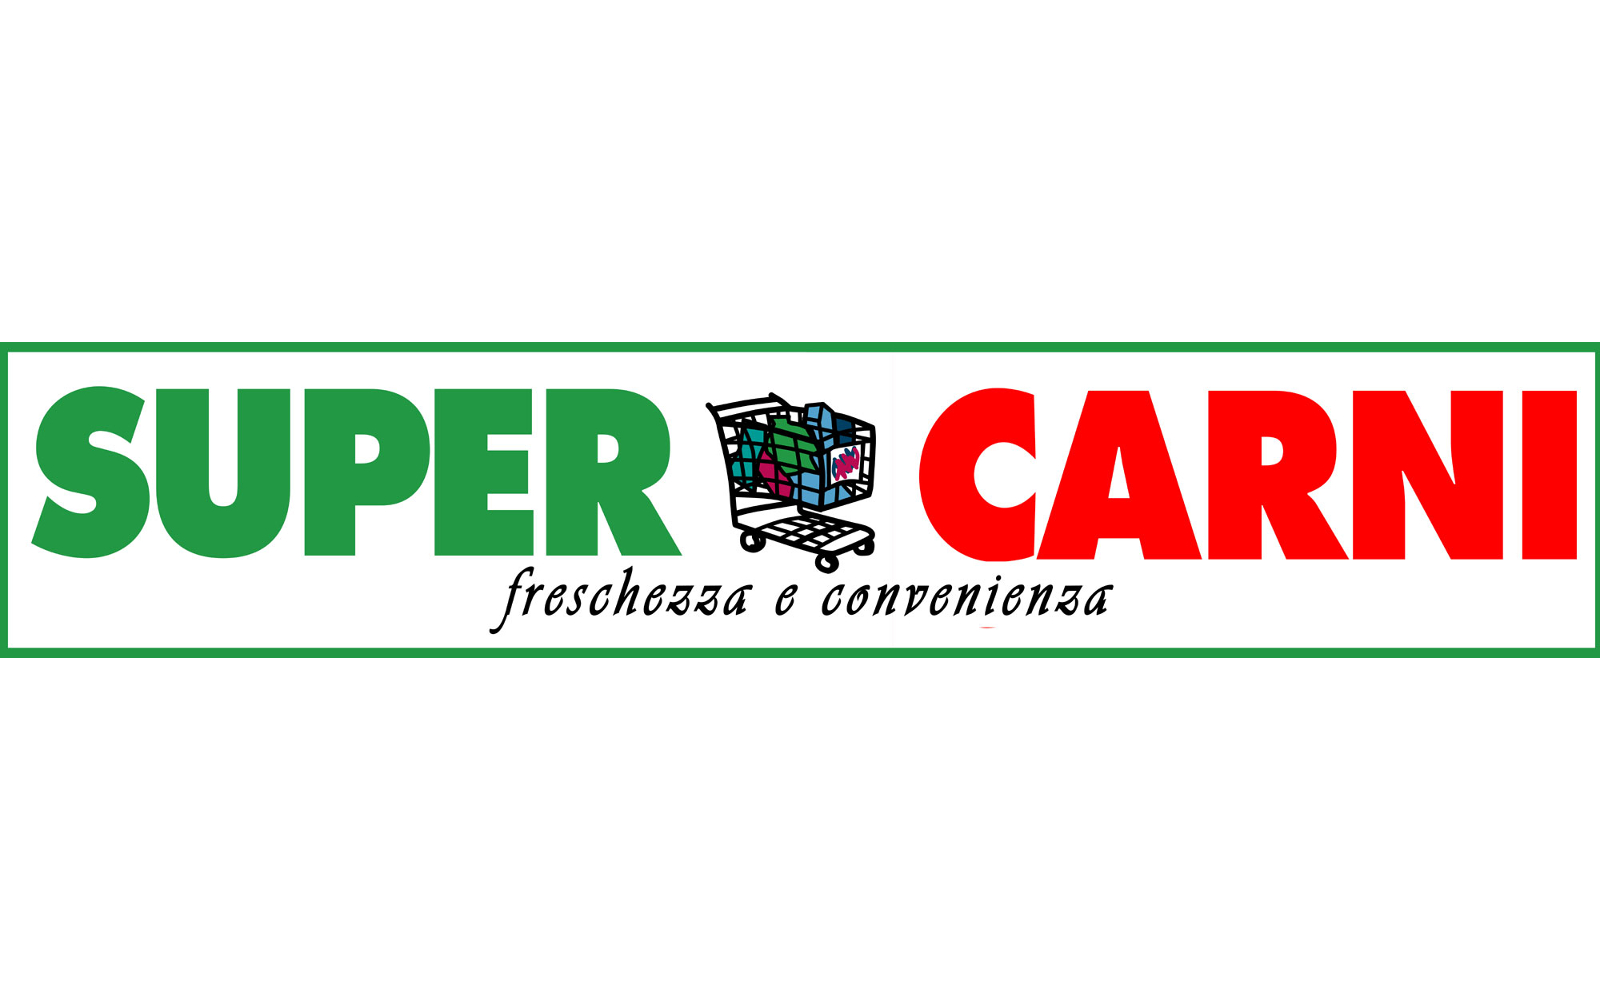 Super Carni - Viale Francesco de Blasio